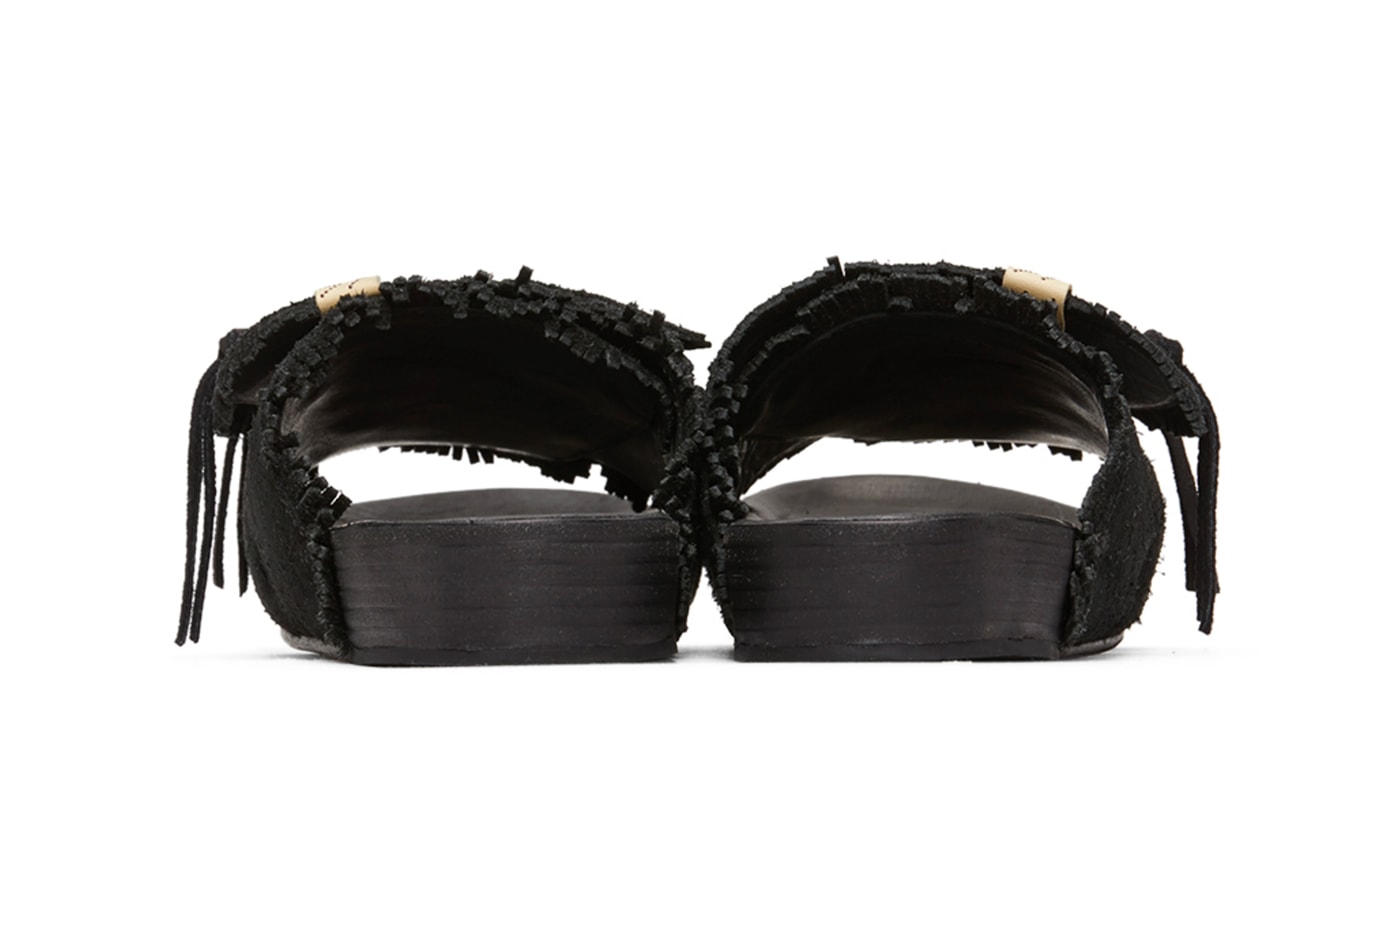 visvim Christo Shaman Folk Sandals in Black FIL ICT Hiroki Nakamura Sandalas Elk Leather Folk Americana Japanese 